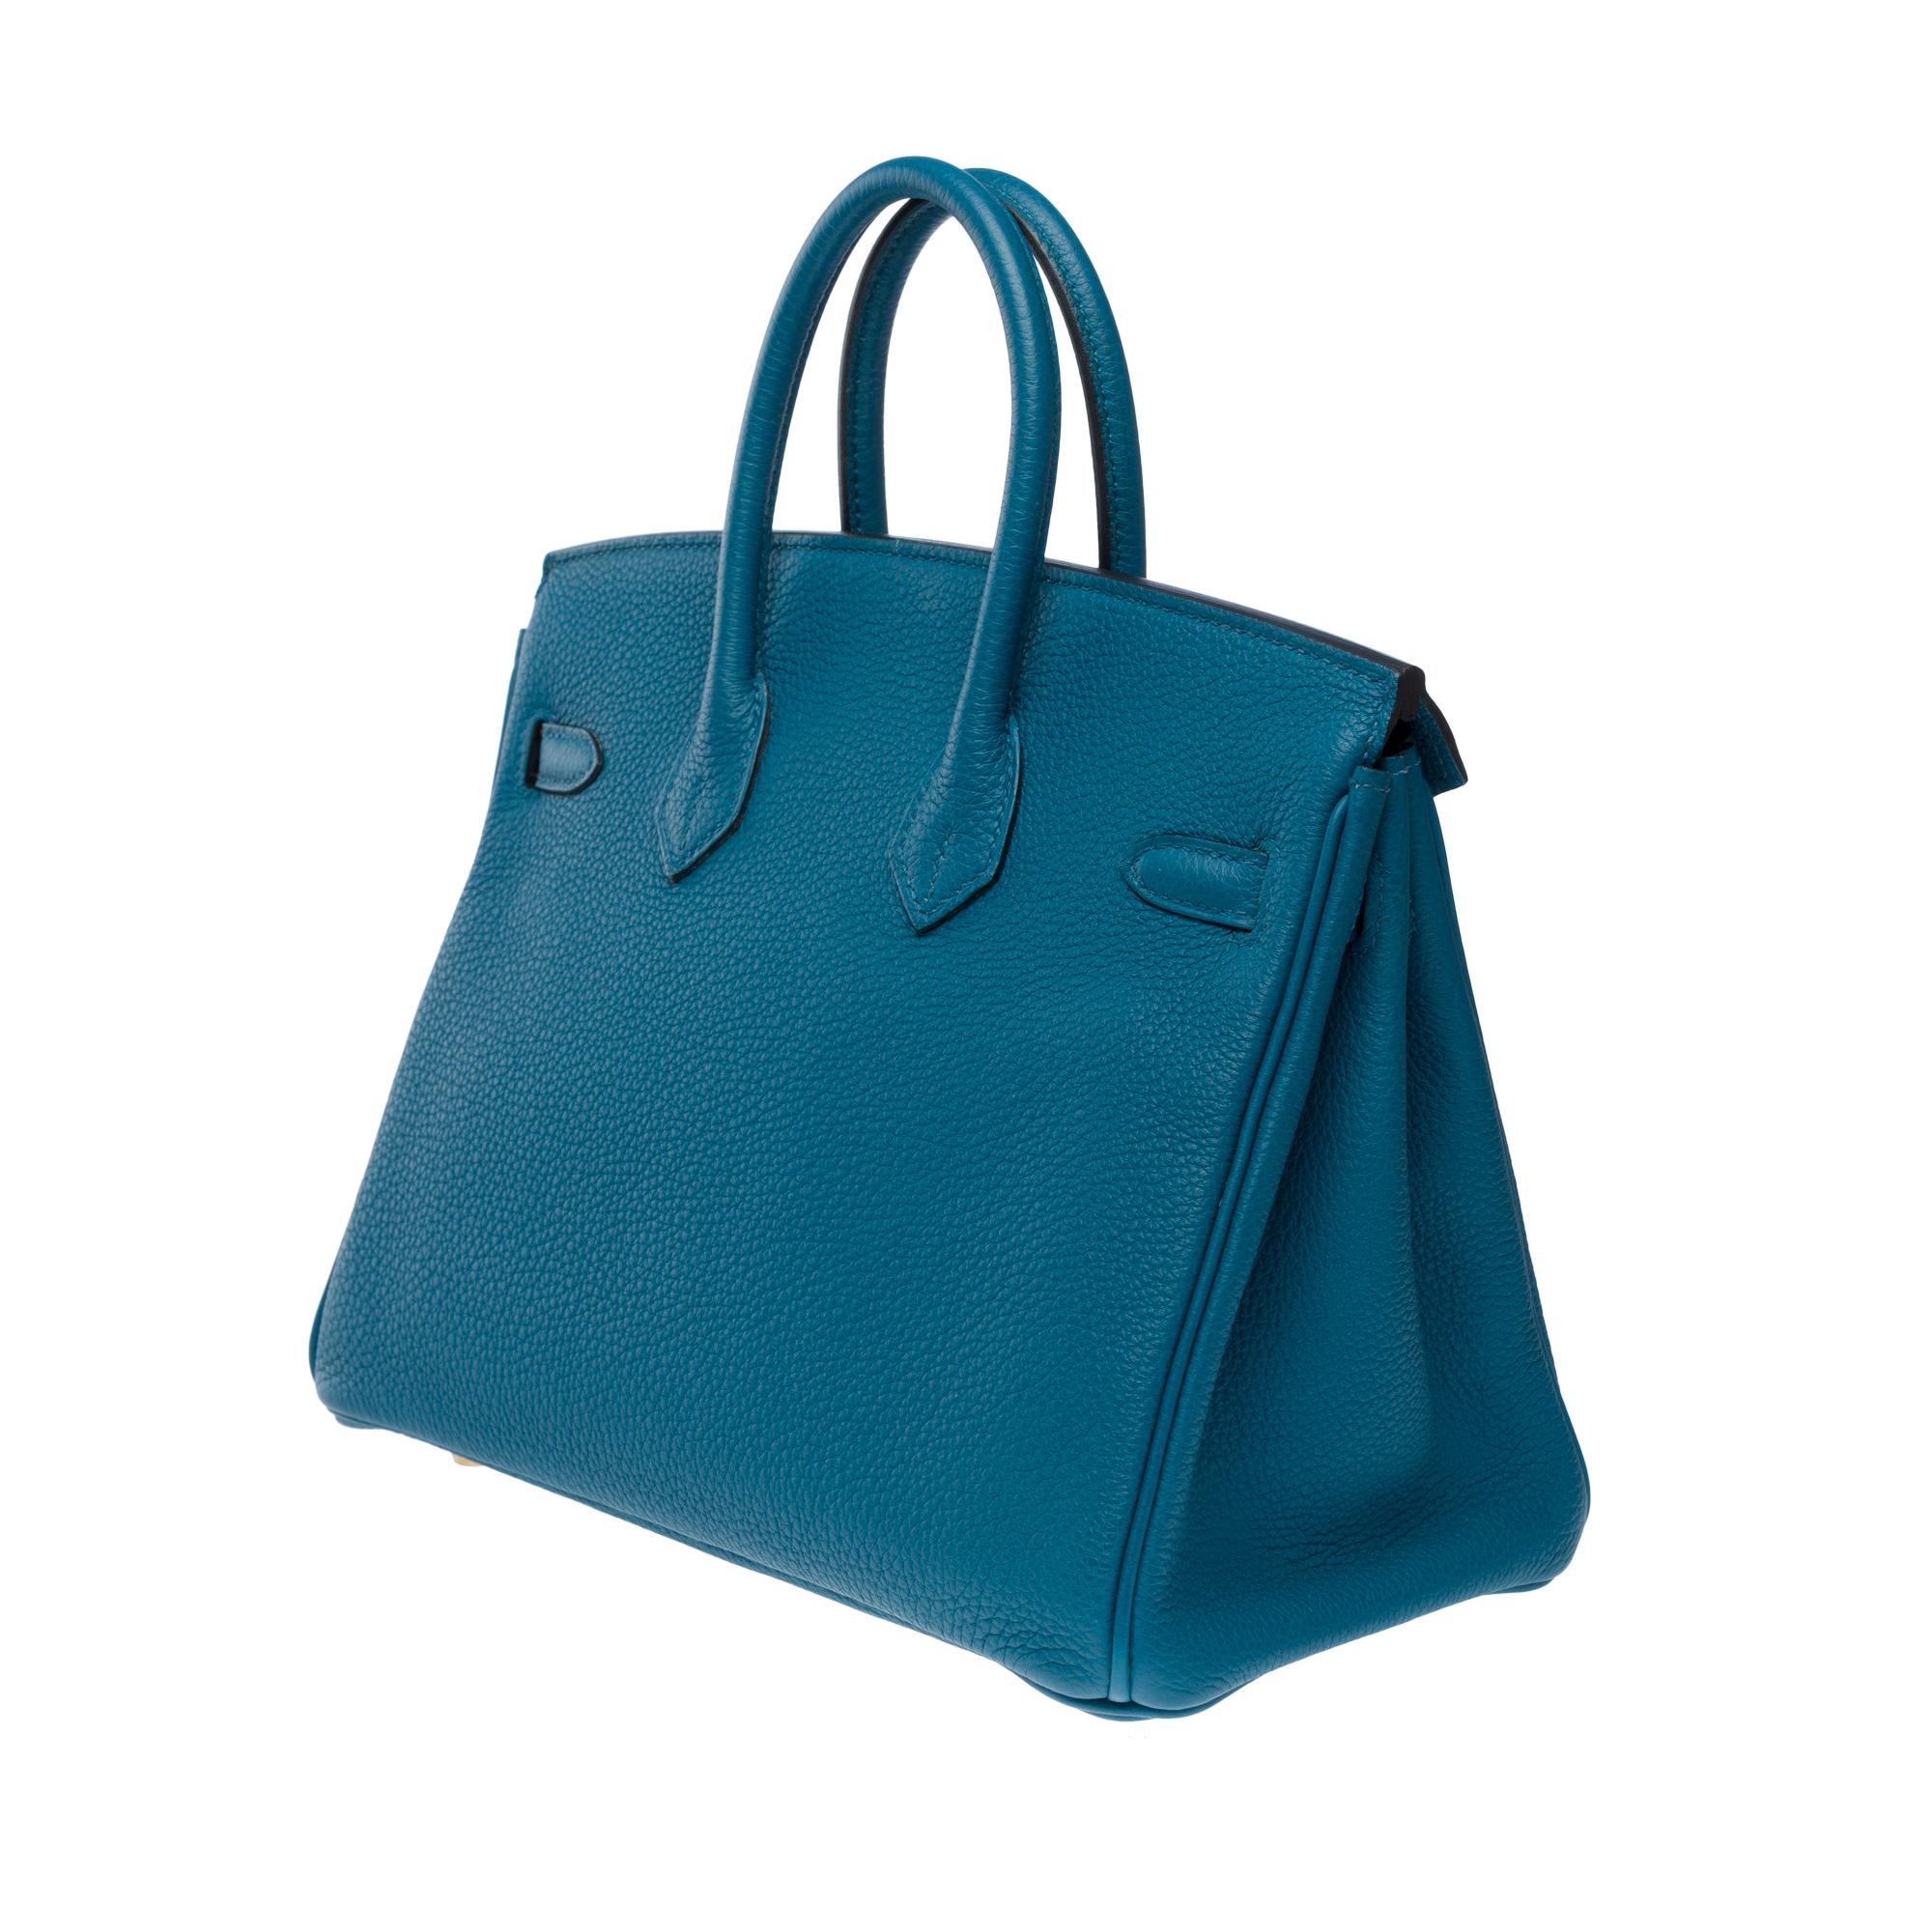 Magnifique sac à main Birkin 25 cm en cuir bleu cobalt Togo, GHW en vente 3